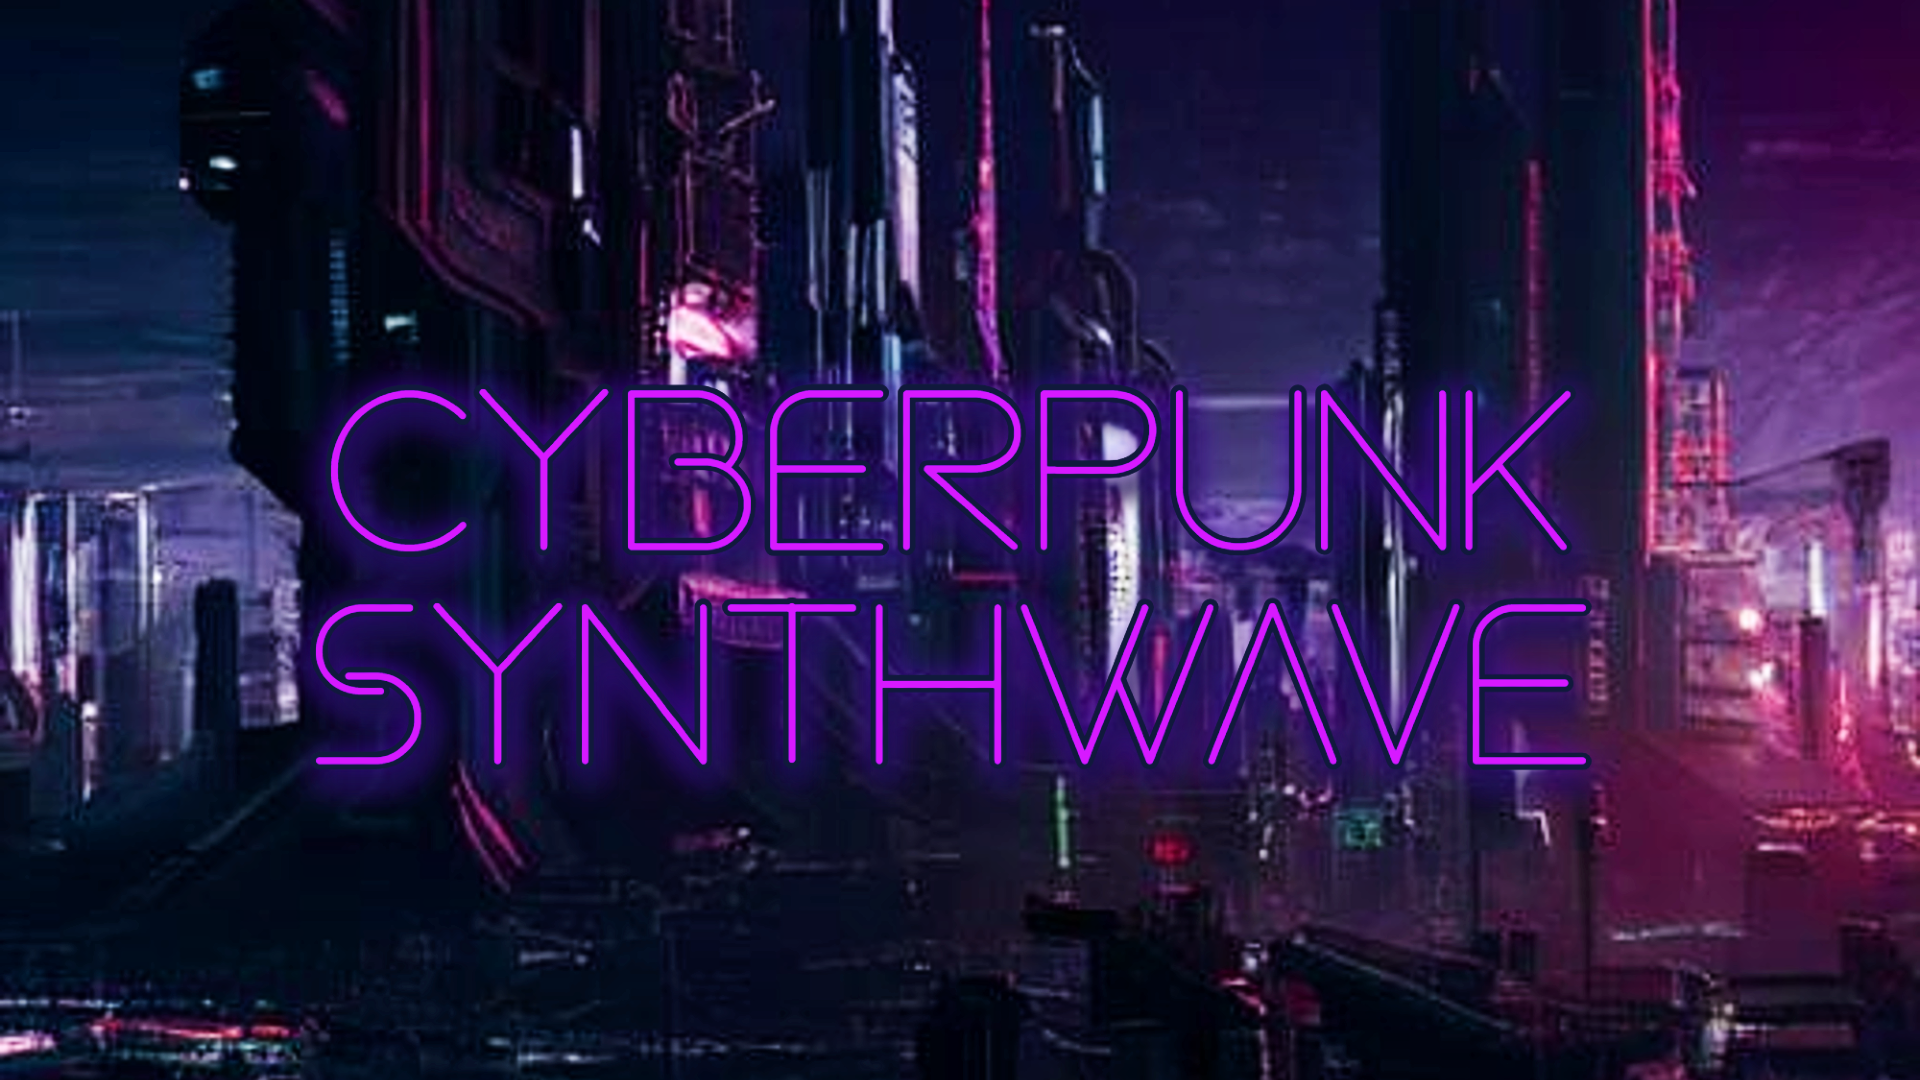 Cyberpunk Synthwave